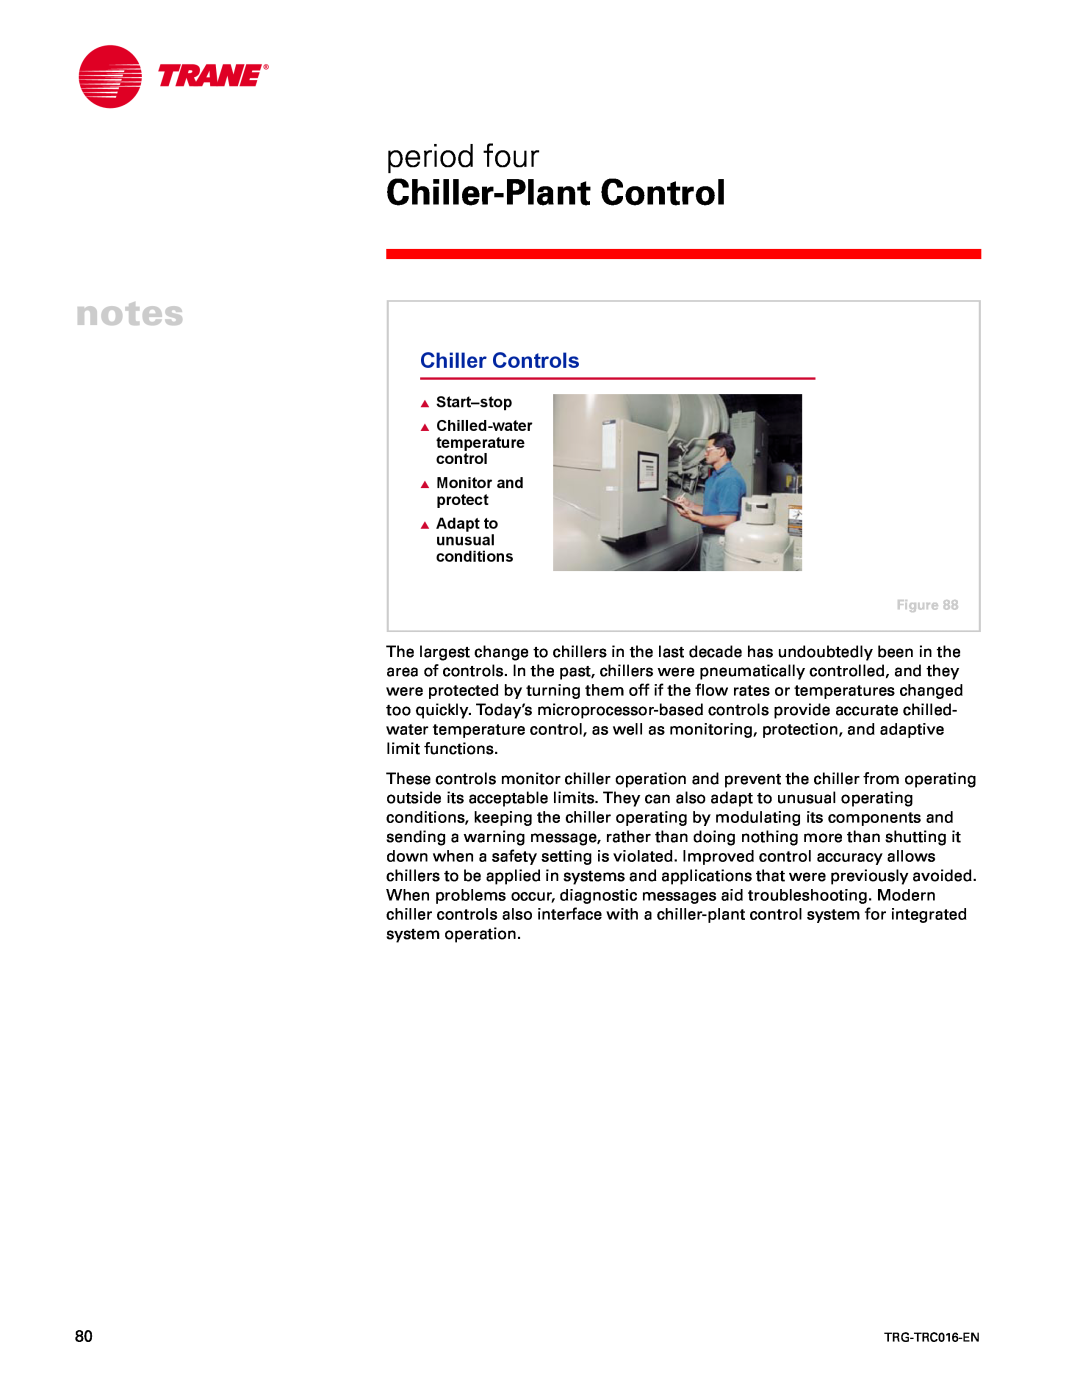 Trane TRG-TRC016-EN manual period four, Chiller Controls, notes, Chiller-PlantControl 